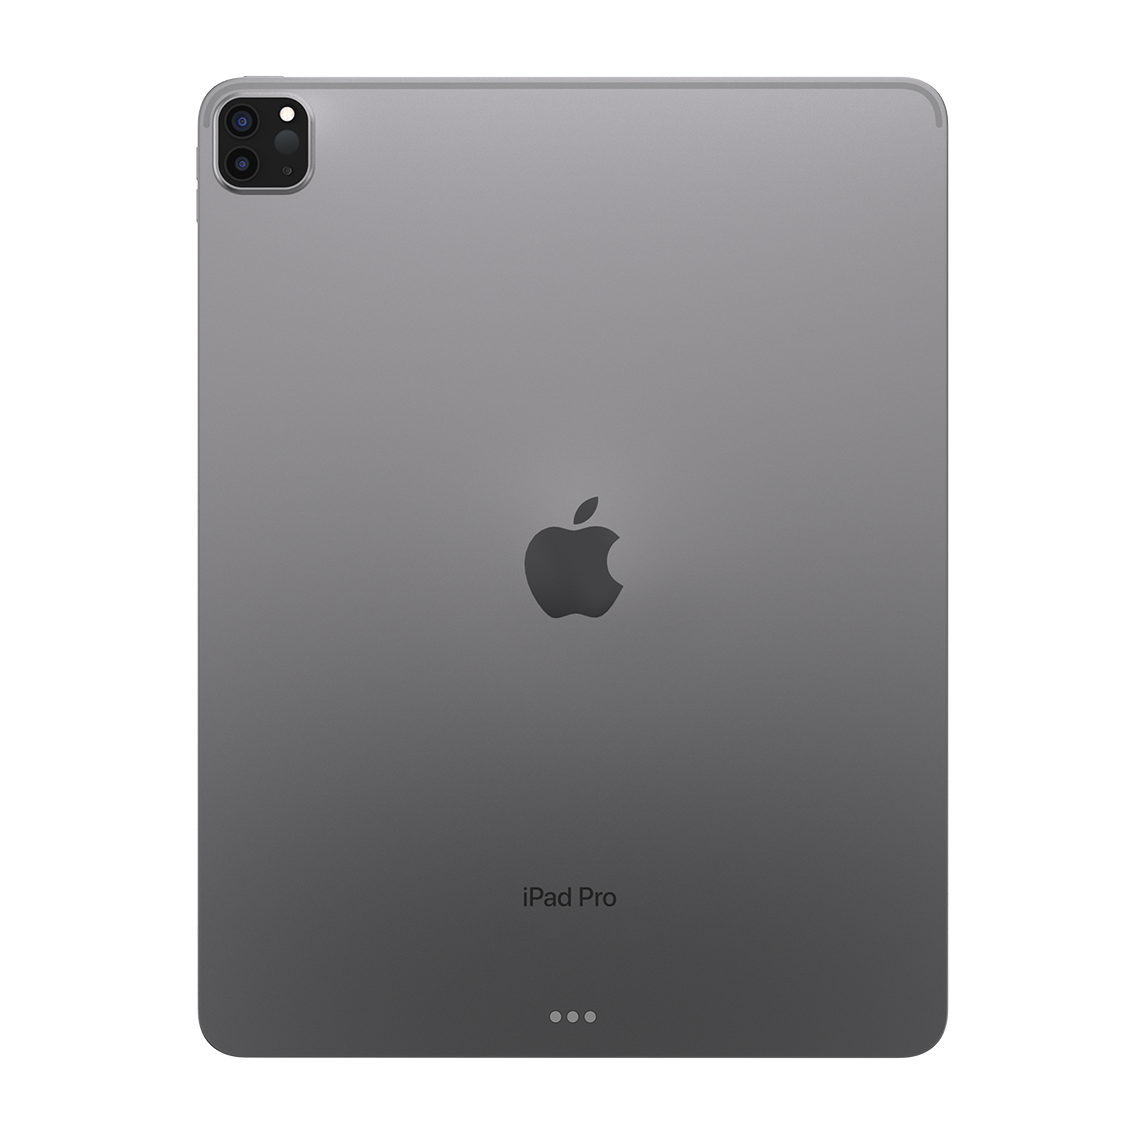 Apple iPad Pro 12.9-inch 6th Generation - Space Gray - 256GB, Wi-Fi + Cellular, Grade B